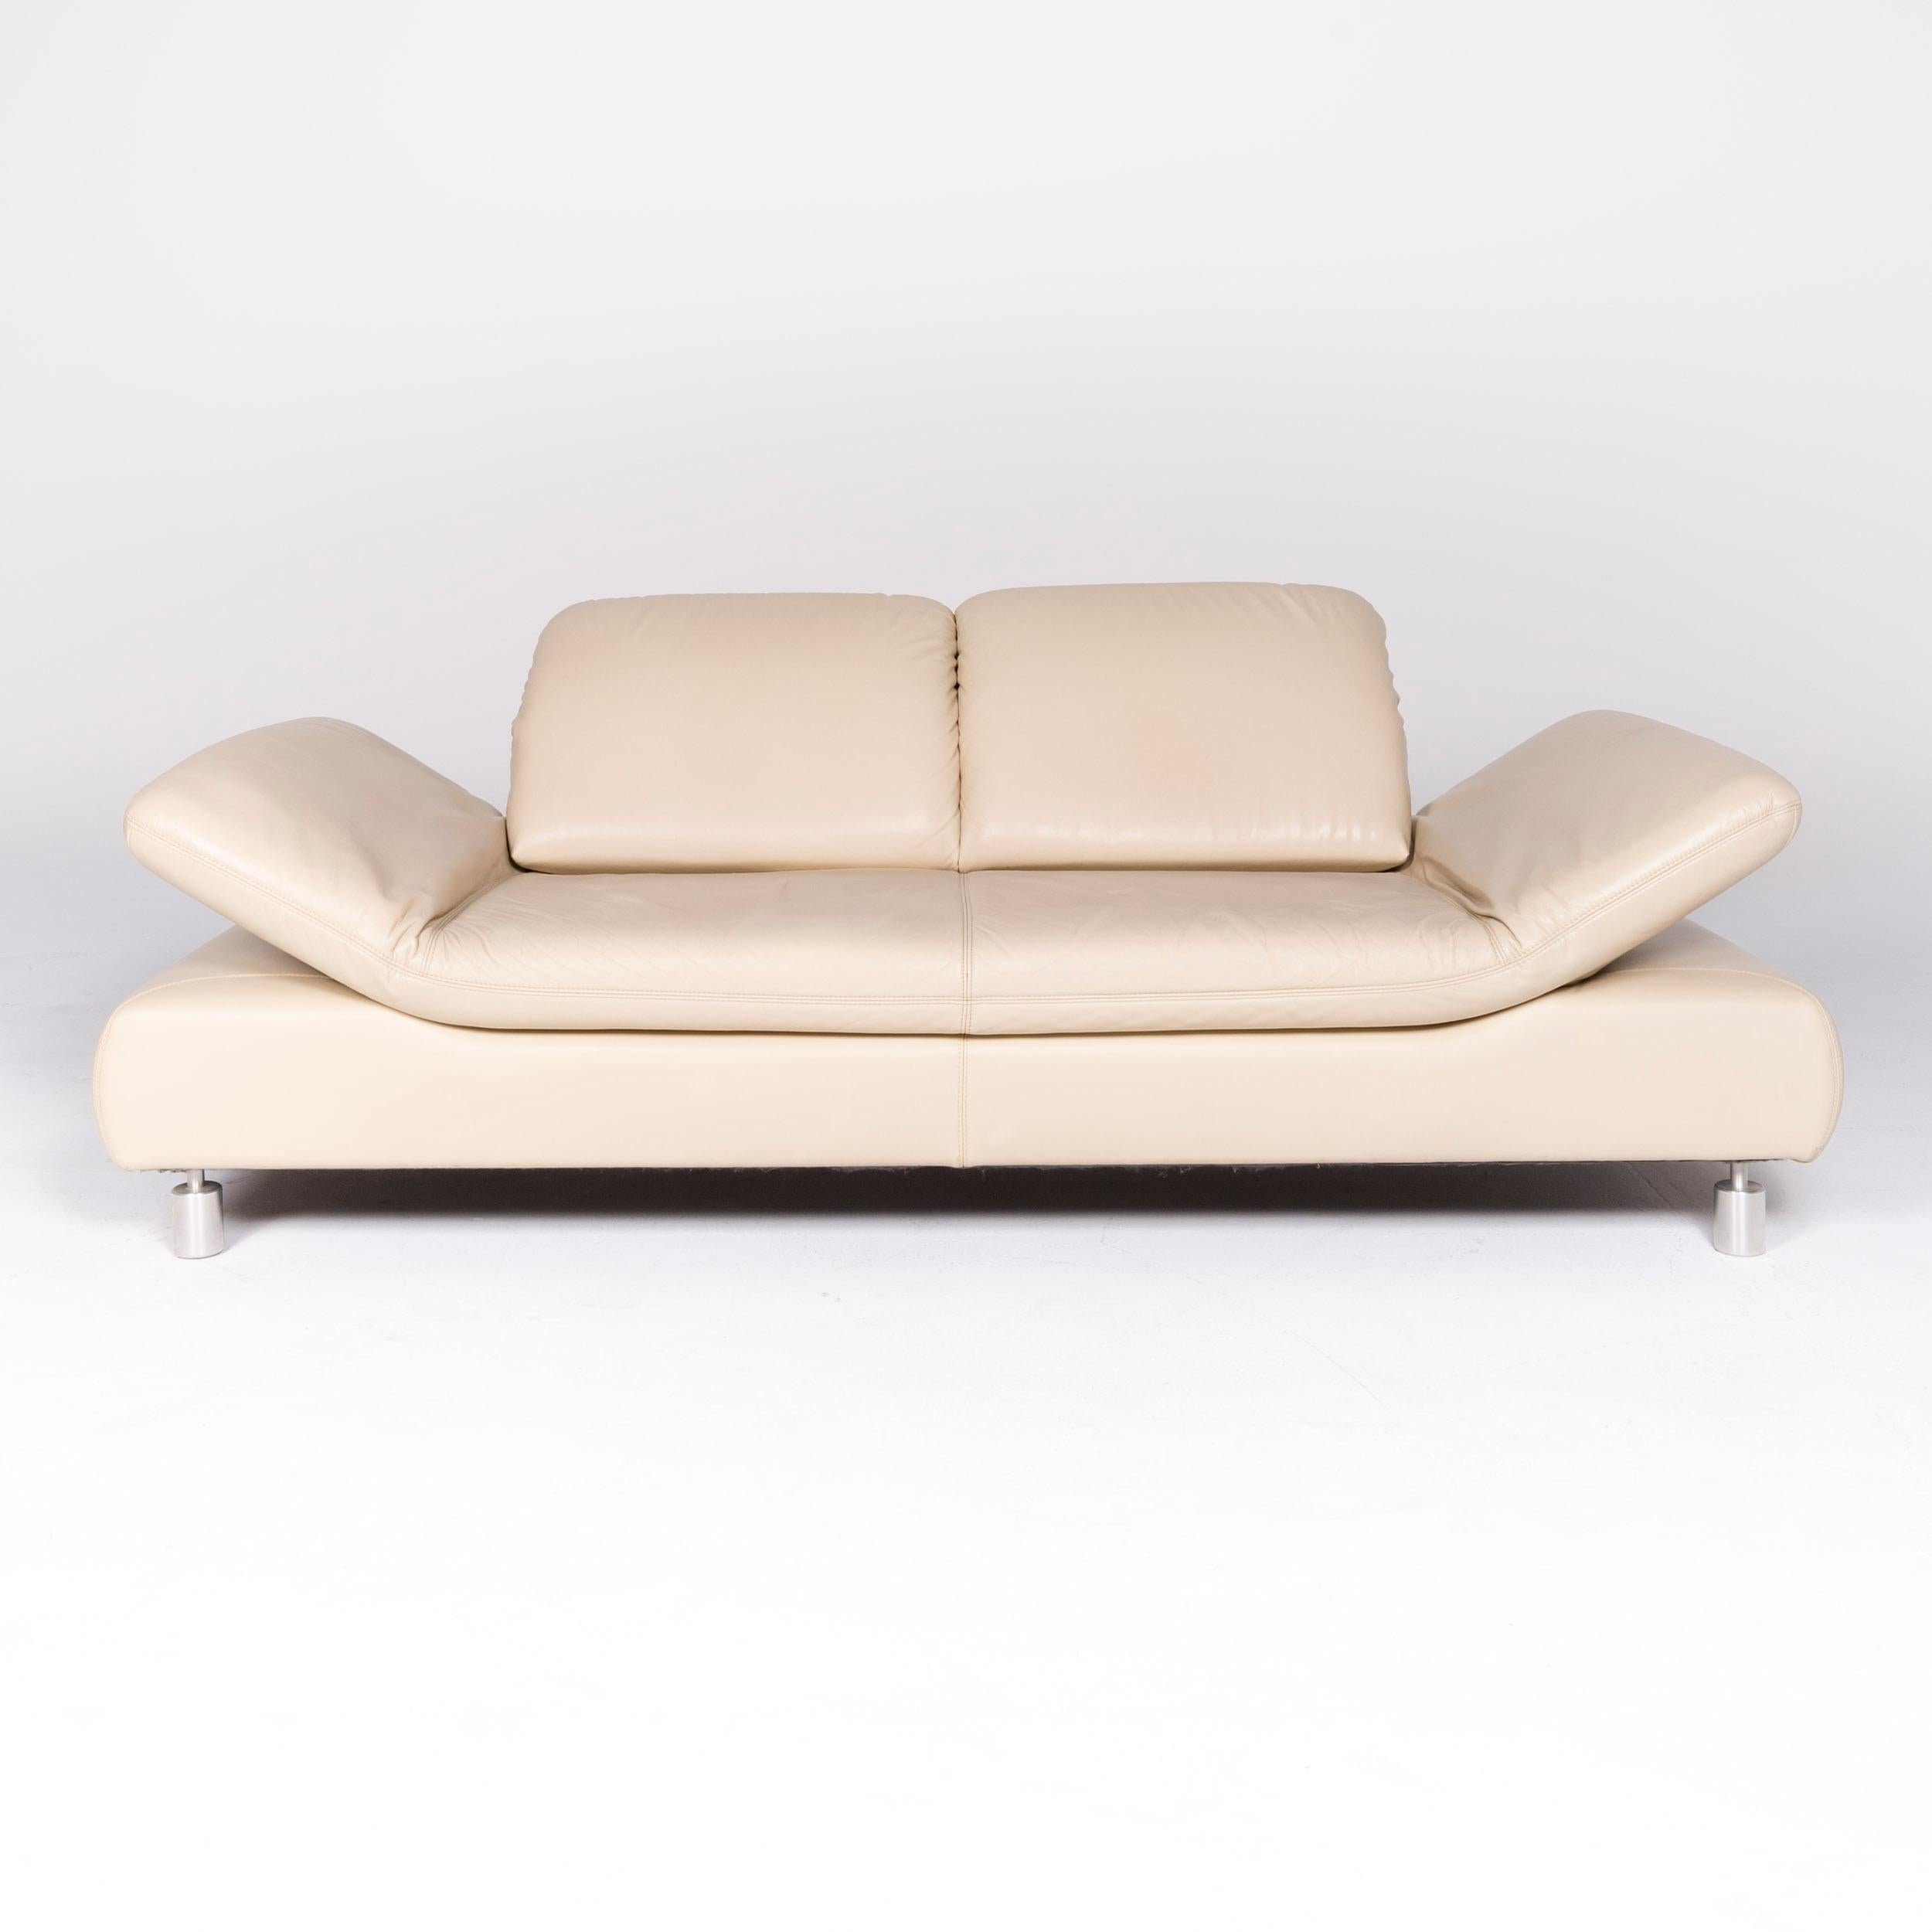 German Koinor Rivoli Designer Leather Sofa Beige Genuine Leather Three-Seat Couch For Sale